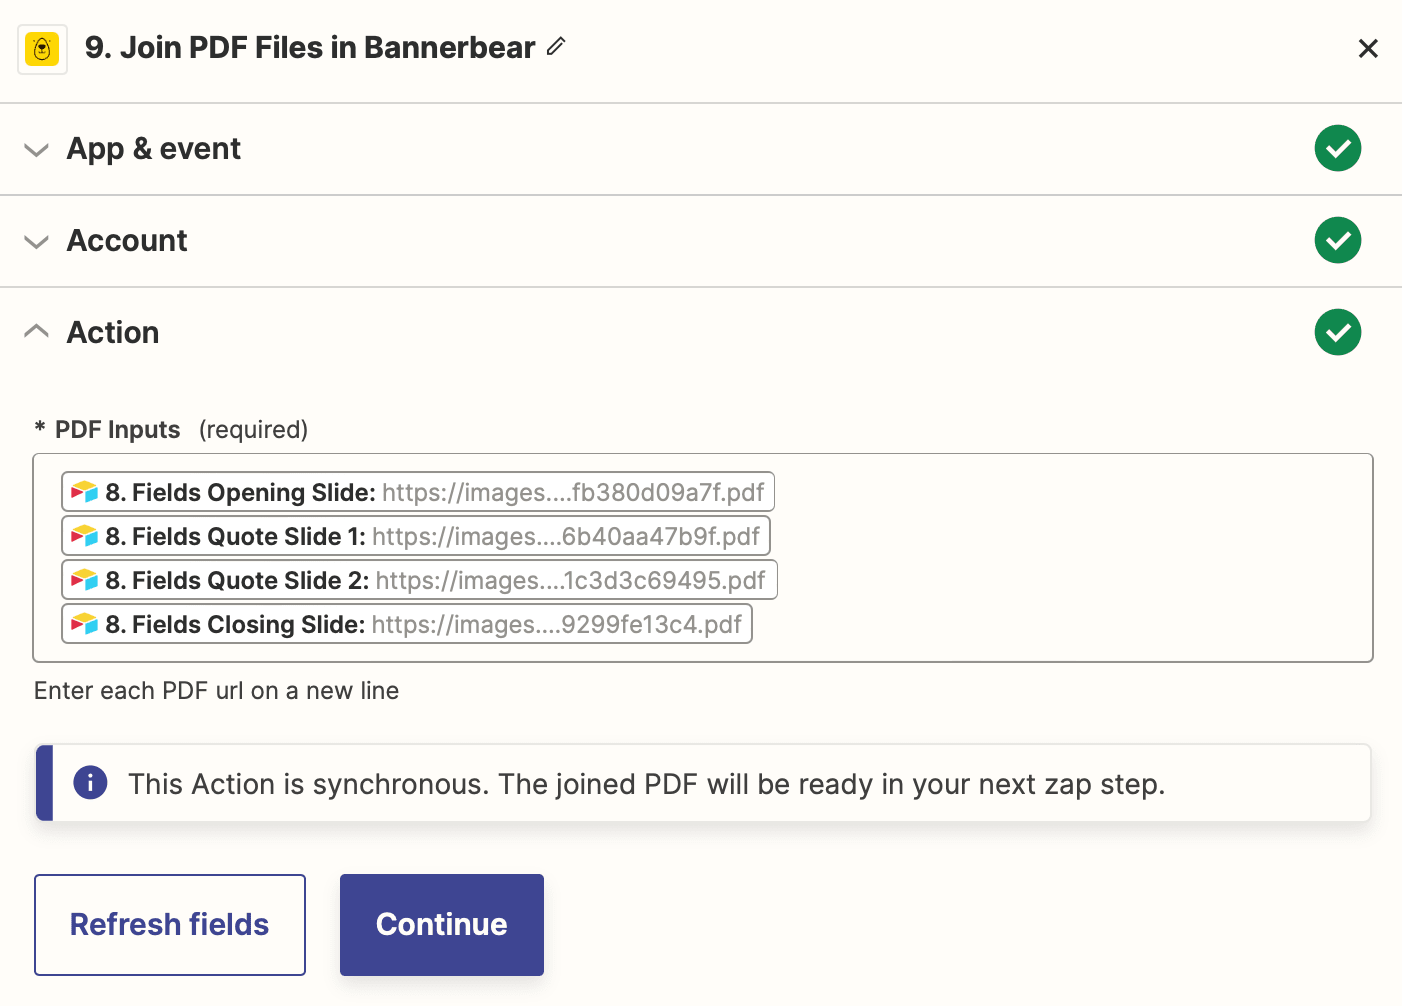 Screenshot of Zapier Bannerbear join PDF files action